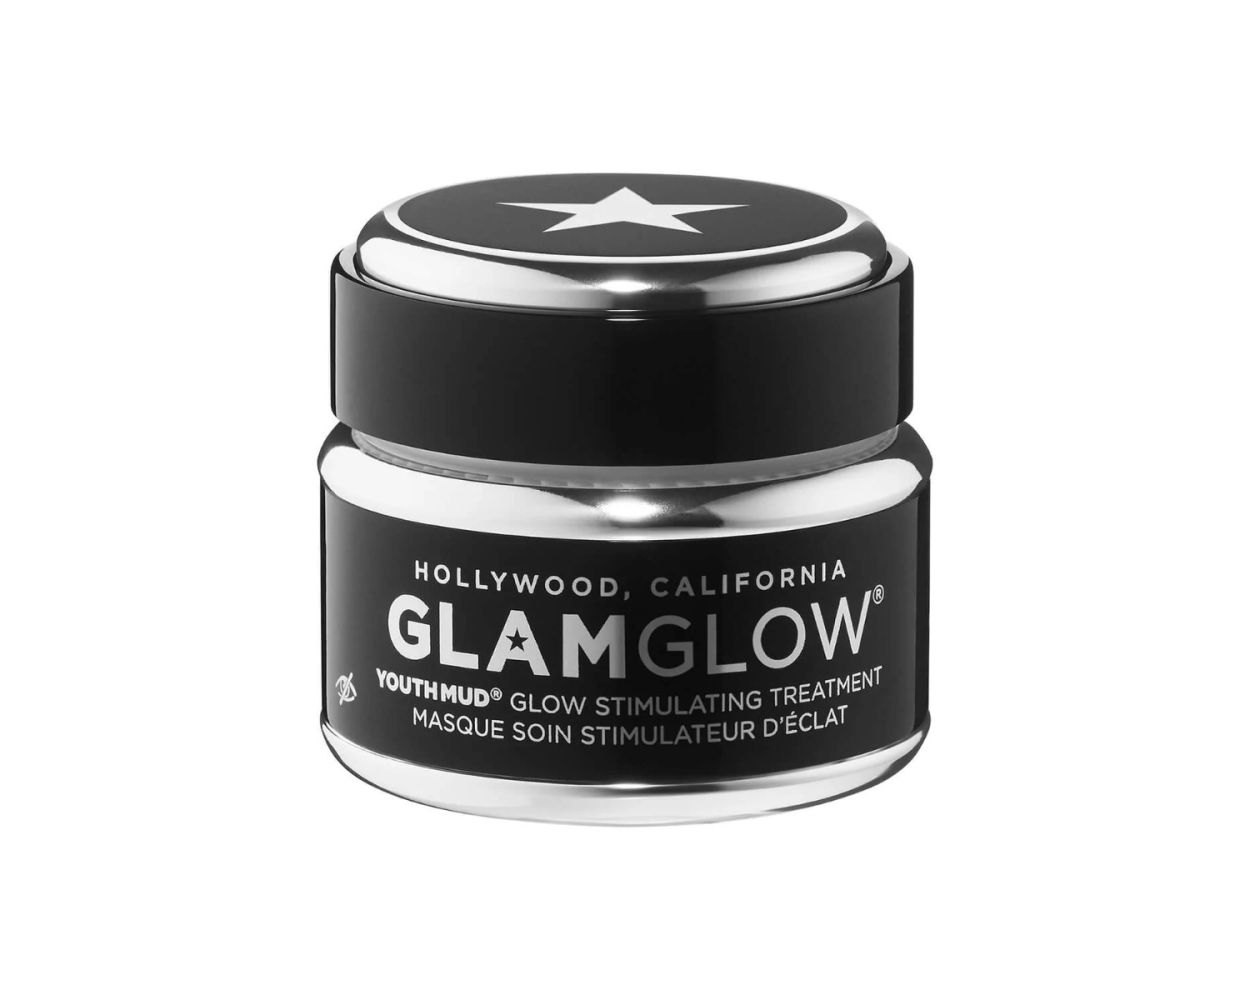 Glam Glow Youth Mud Glow Stimulating Treatment Face Mask - AllurebeautypkGlam Glow Youth Mud Glow Stimulating Treatment Face Mask